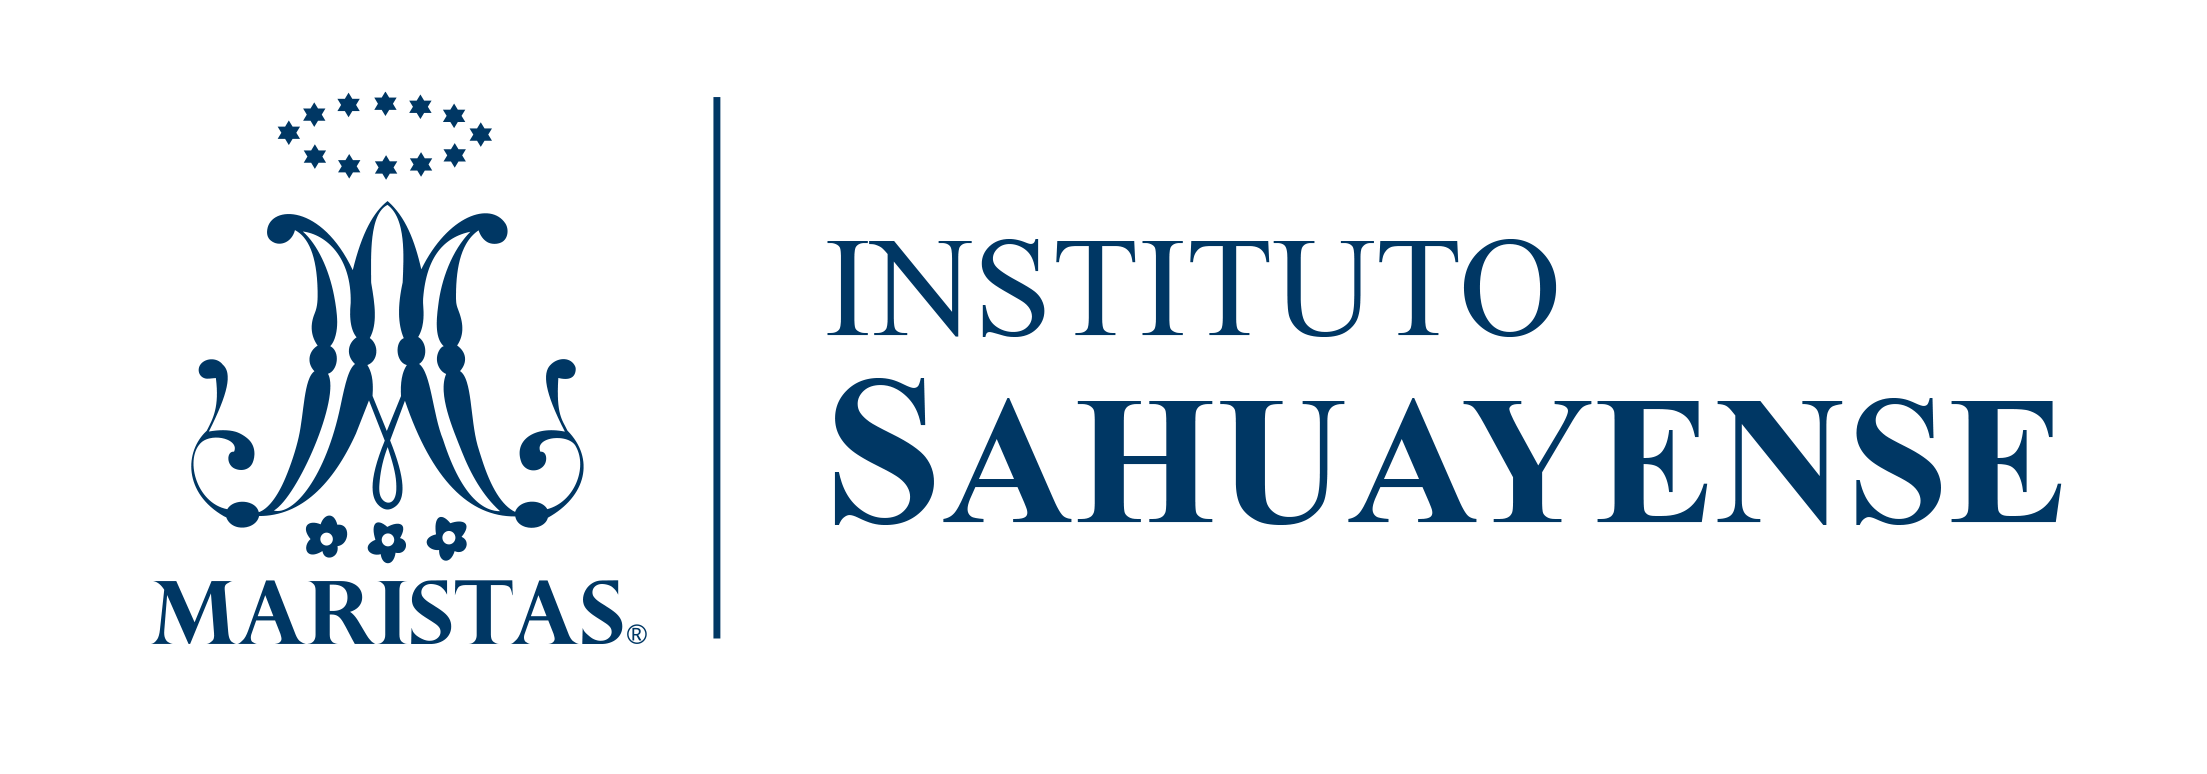 instituto sahuayense michoacan logo